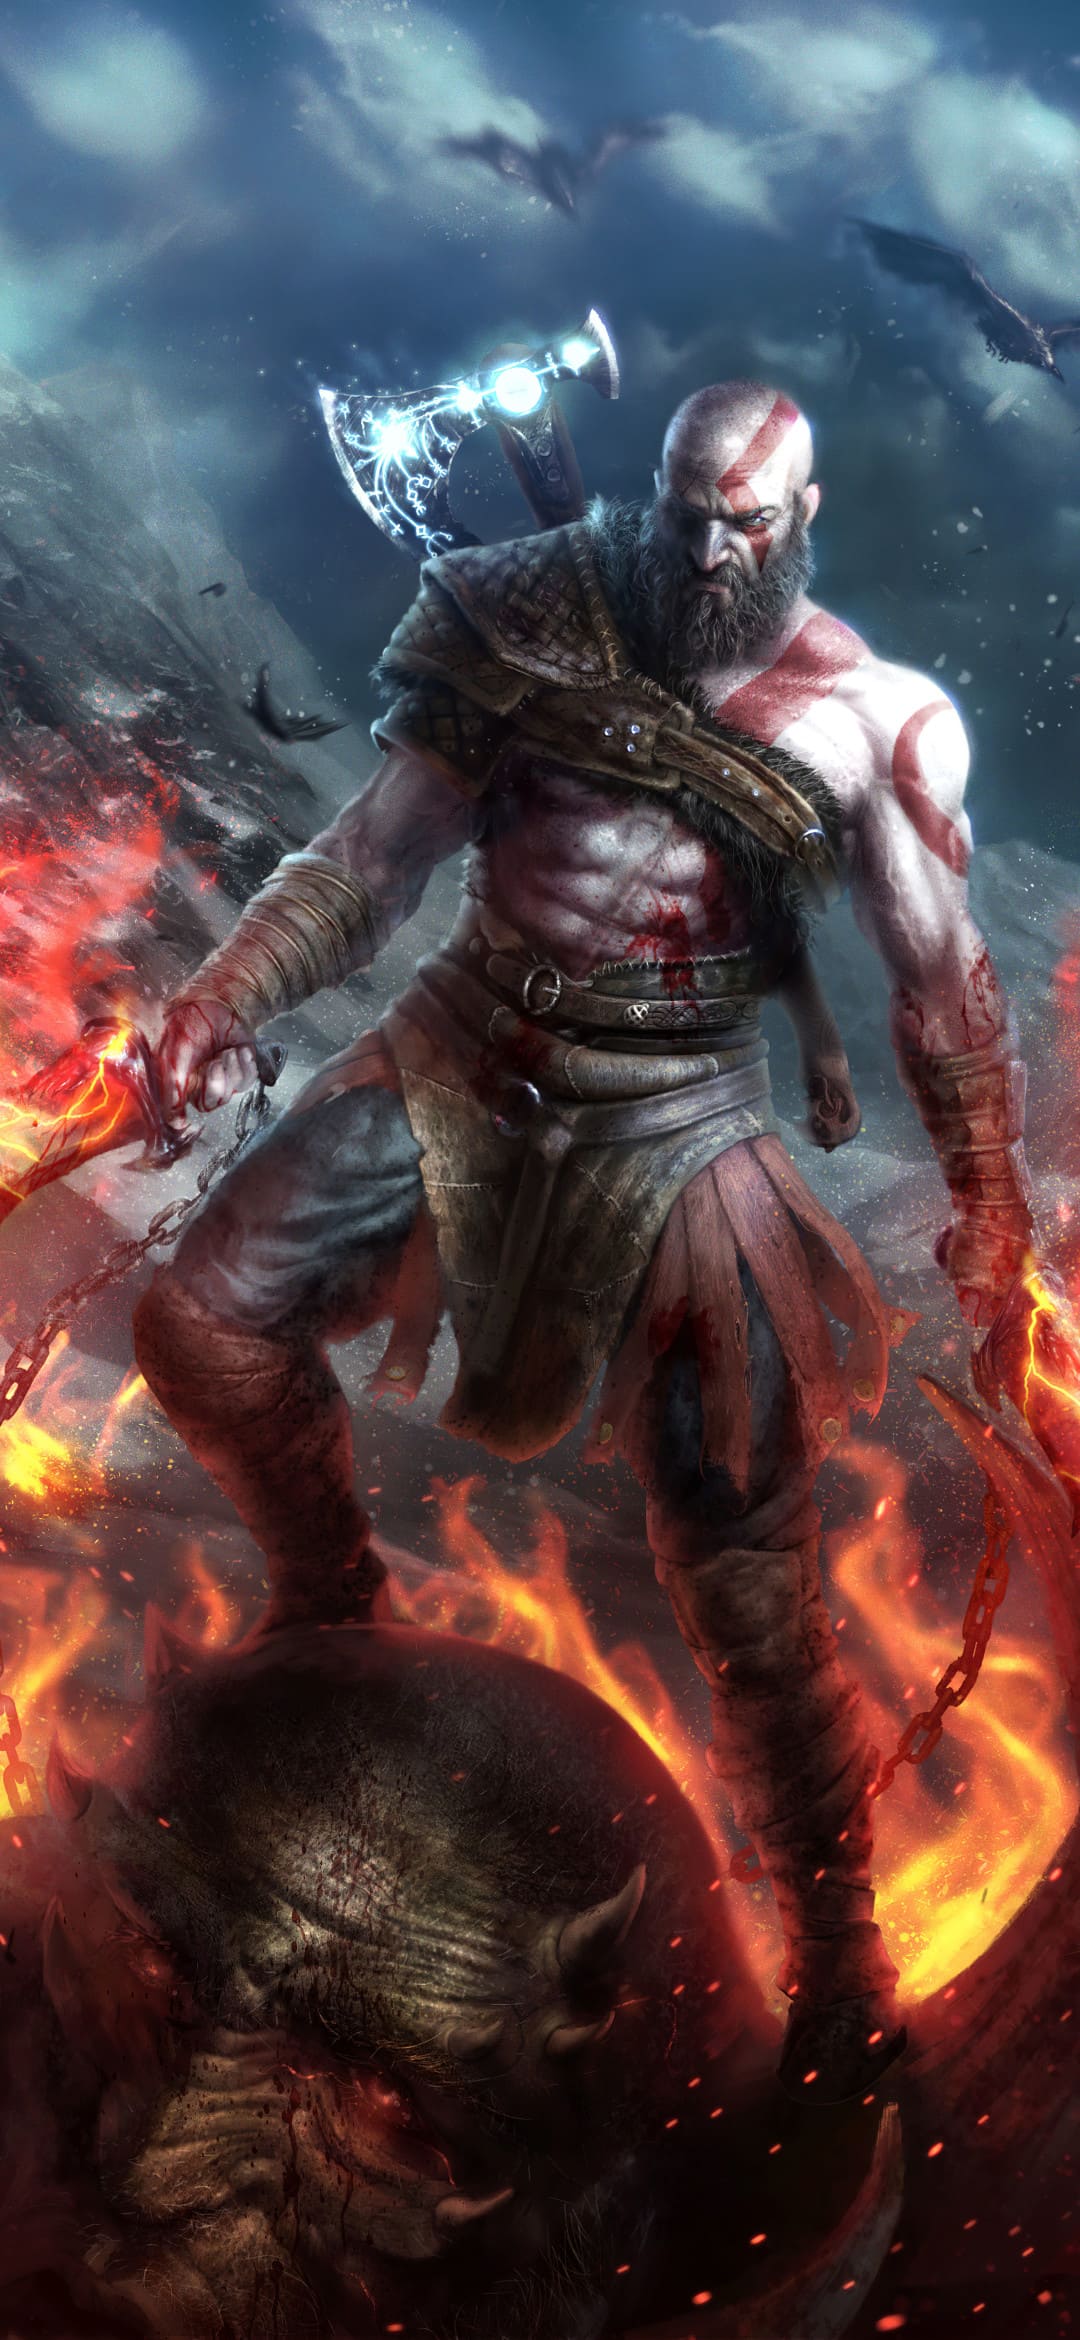 God of War Wallpapers -Top 65 Best God of War Backgrounds